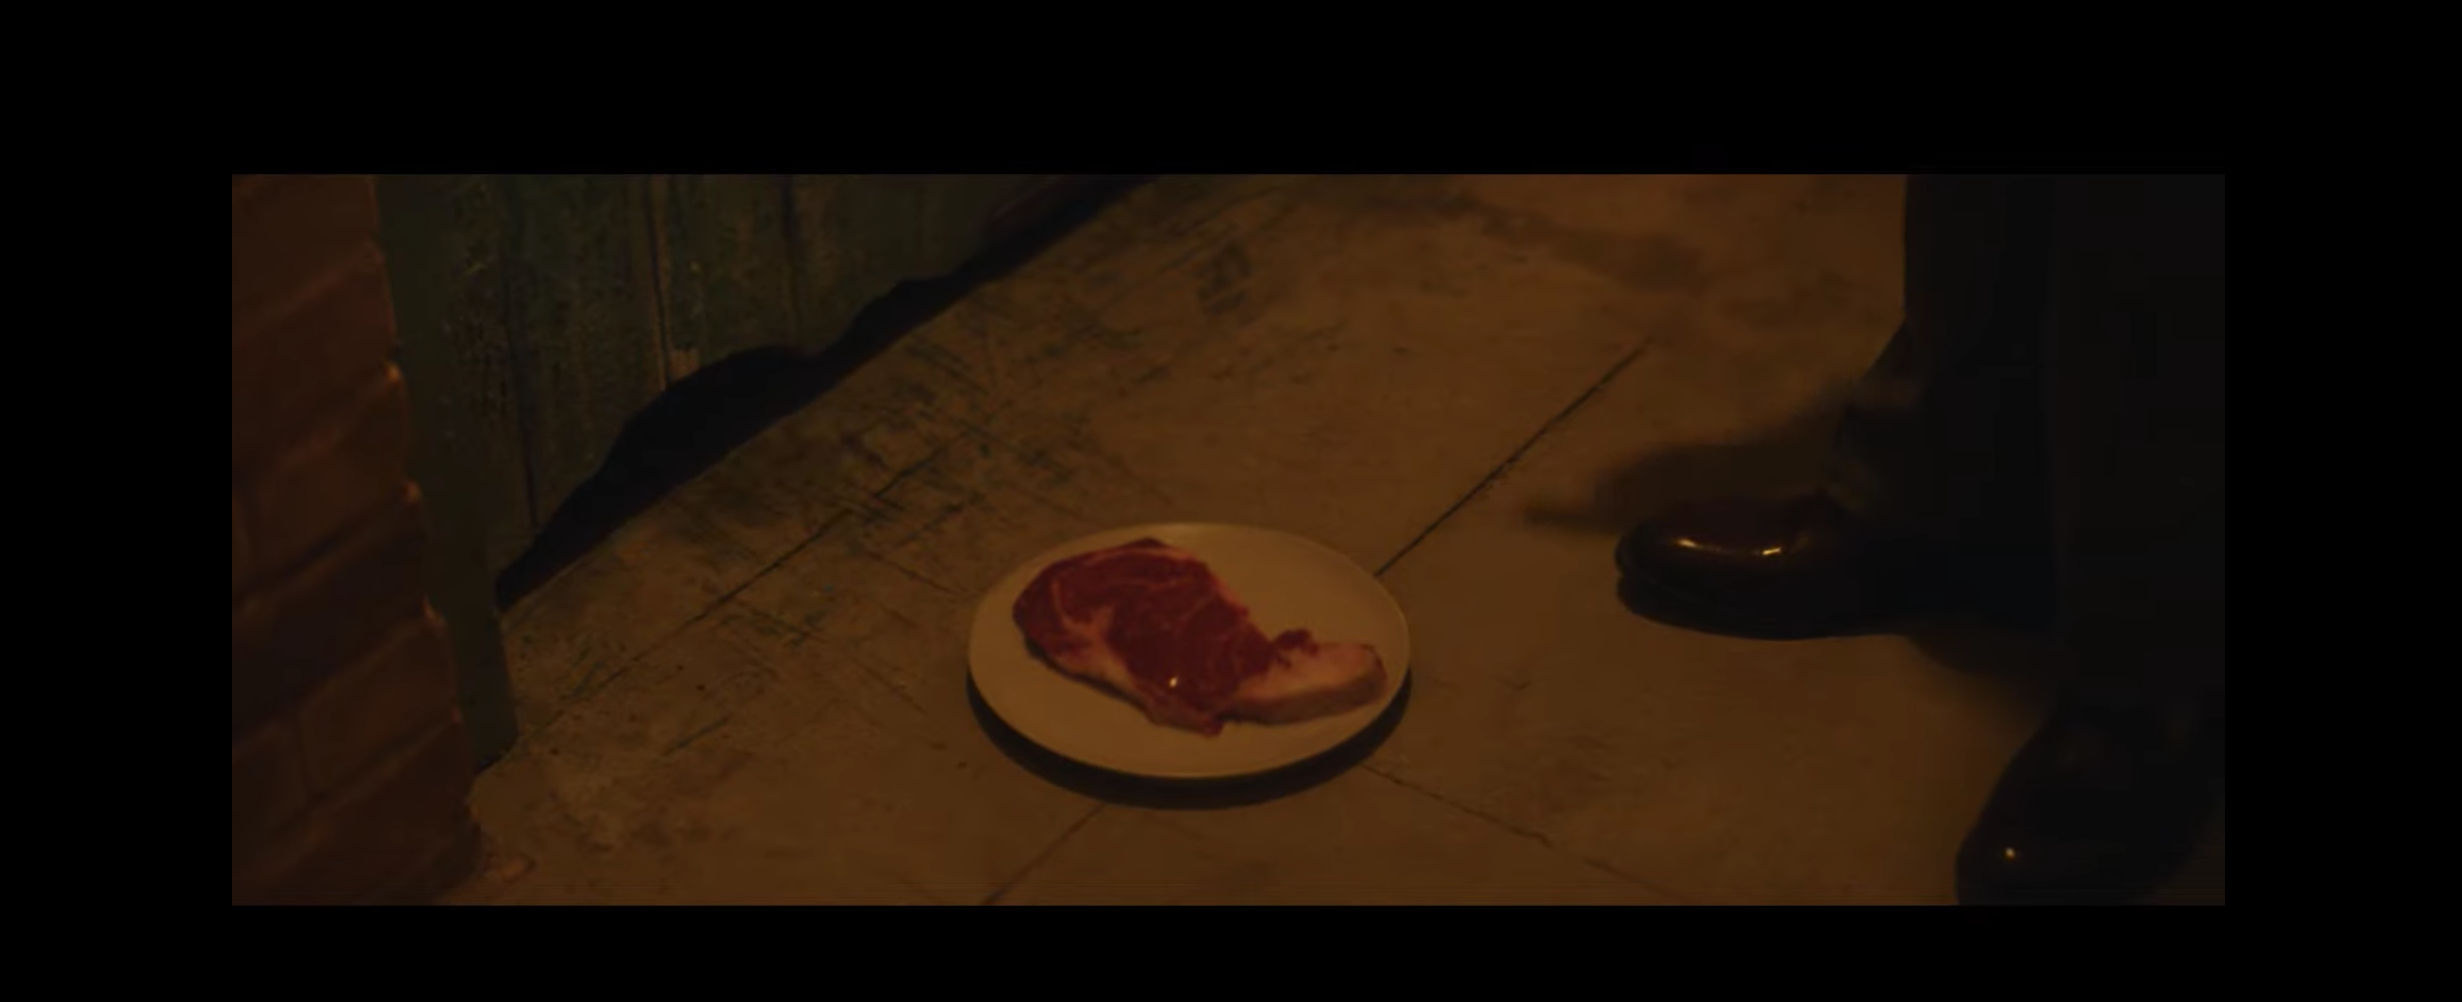 PS Plus ad, Mr Malcoim feeds steak to the hostage